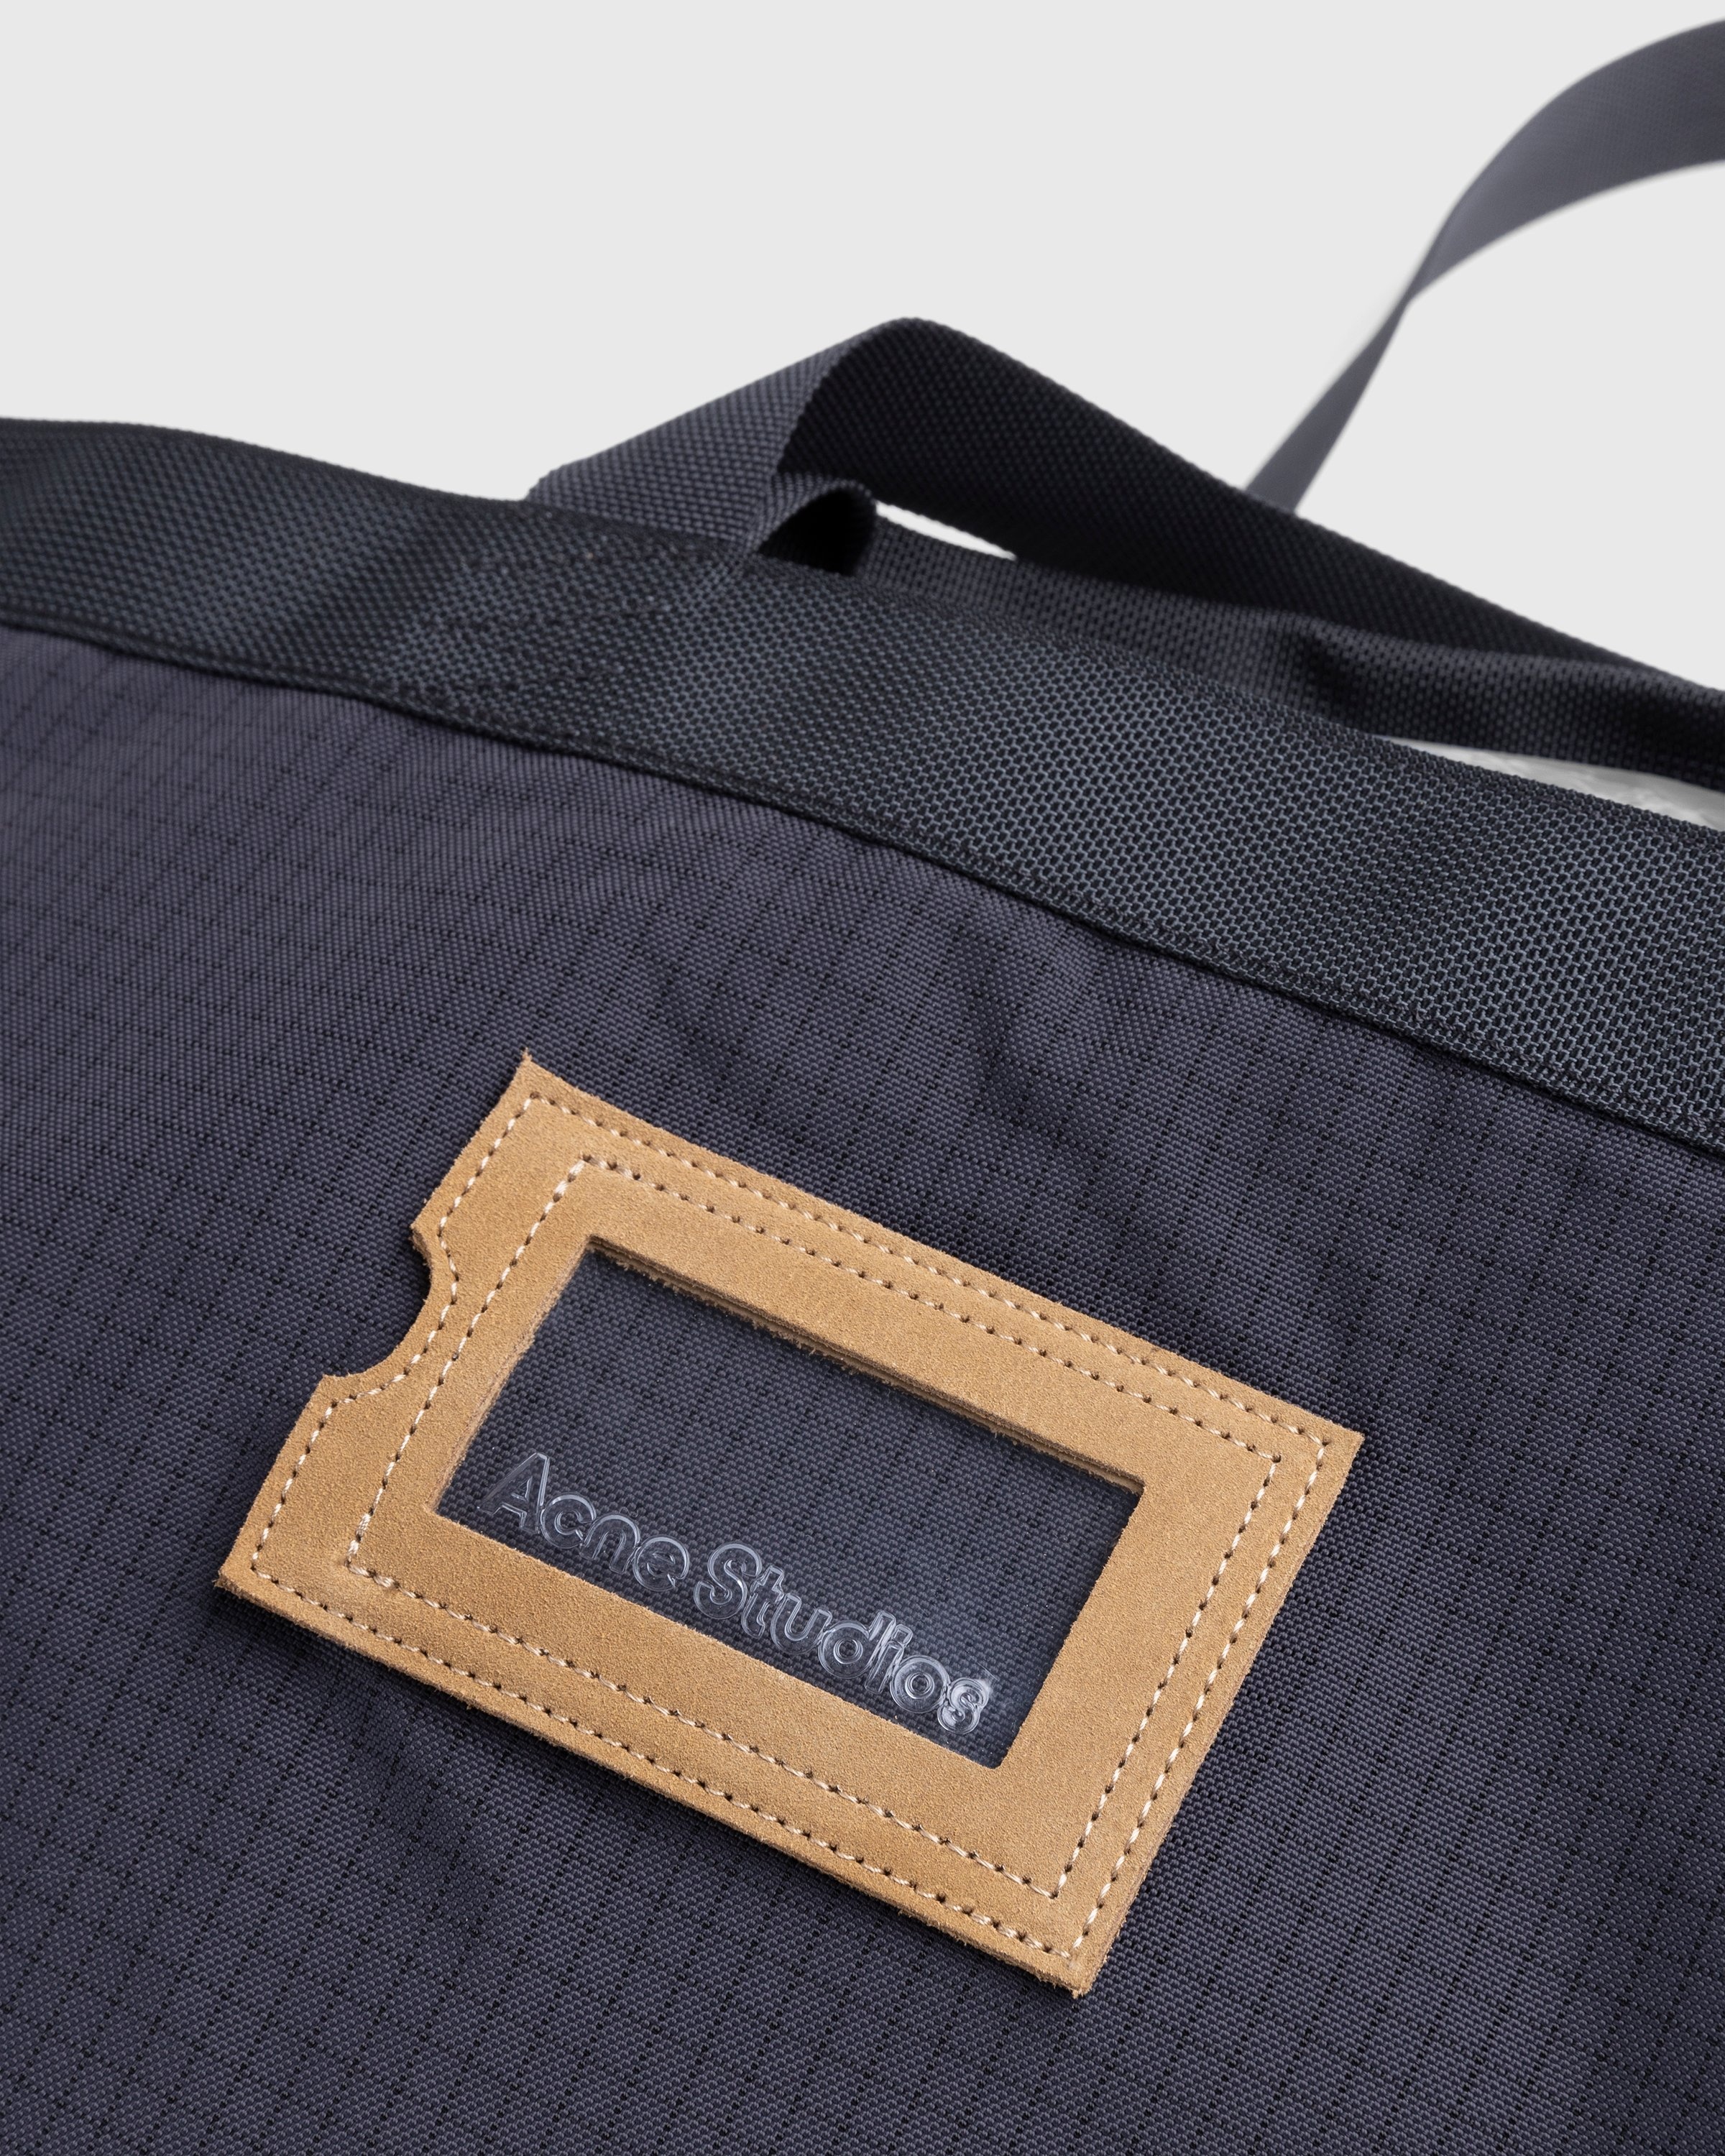 Acne Studios – Nylon Tote Bag Black - Bags - Black - Image 6